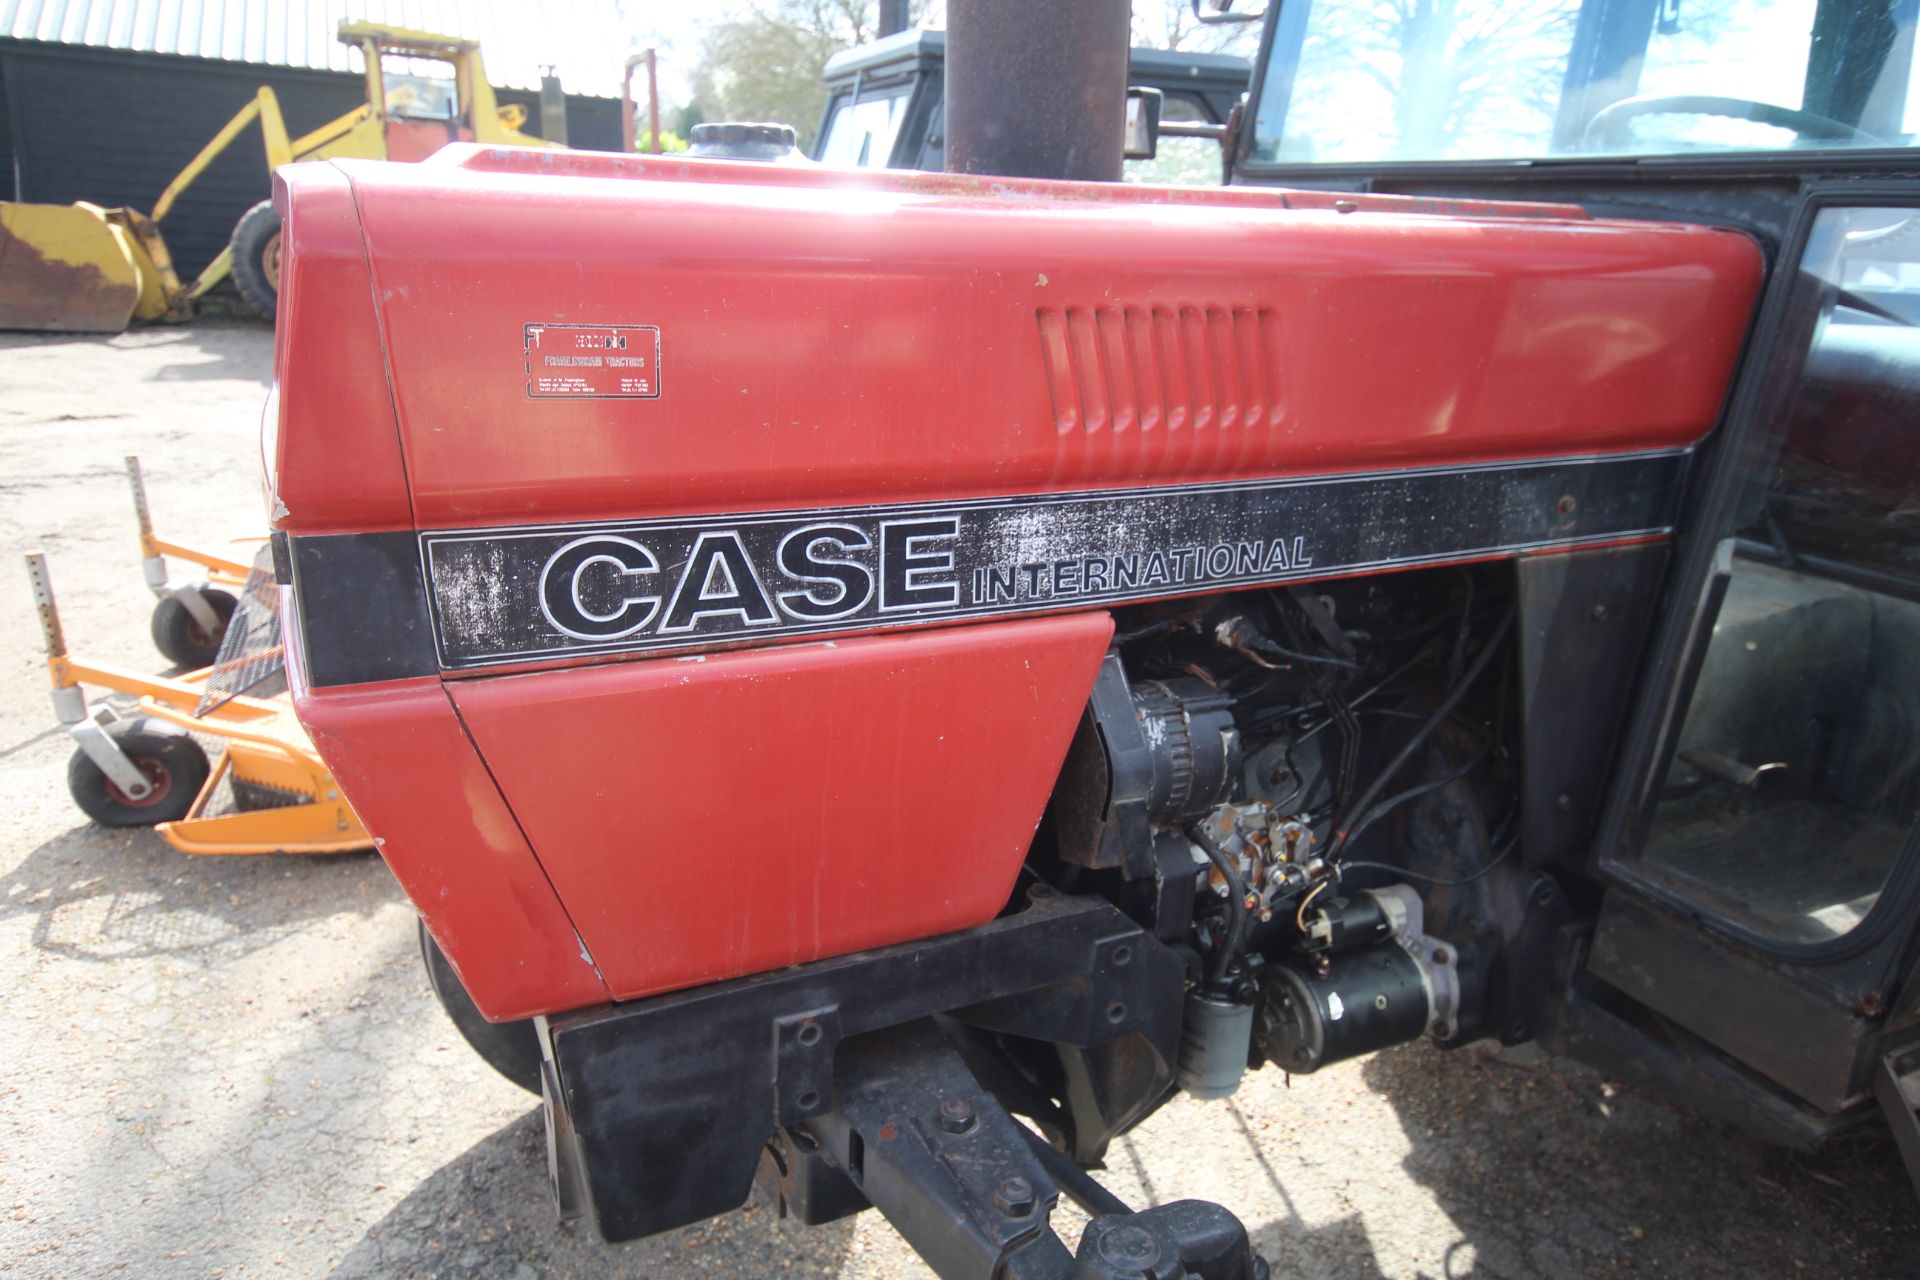 Case International 485 2WD tractor. Registration D404 APV. Date of first registration 27/10/1986. - Image 9 of 57